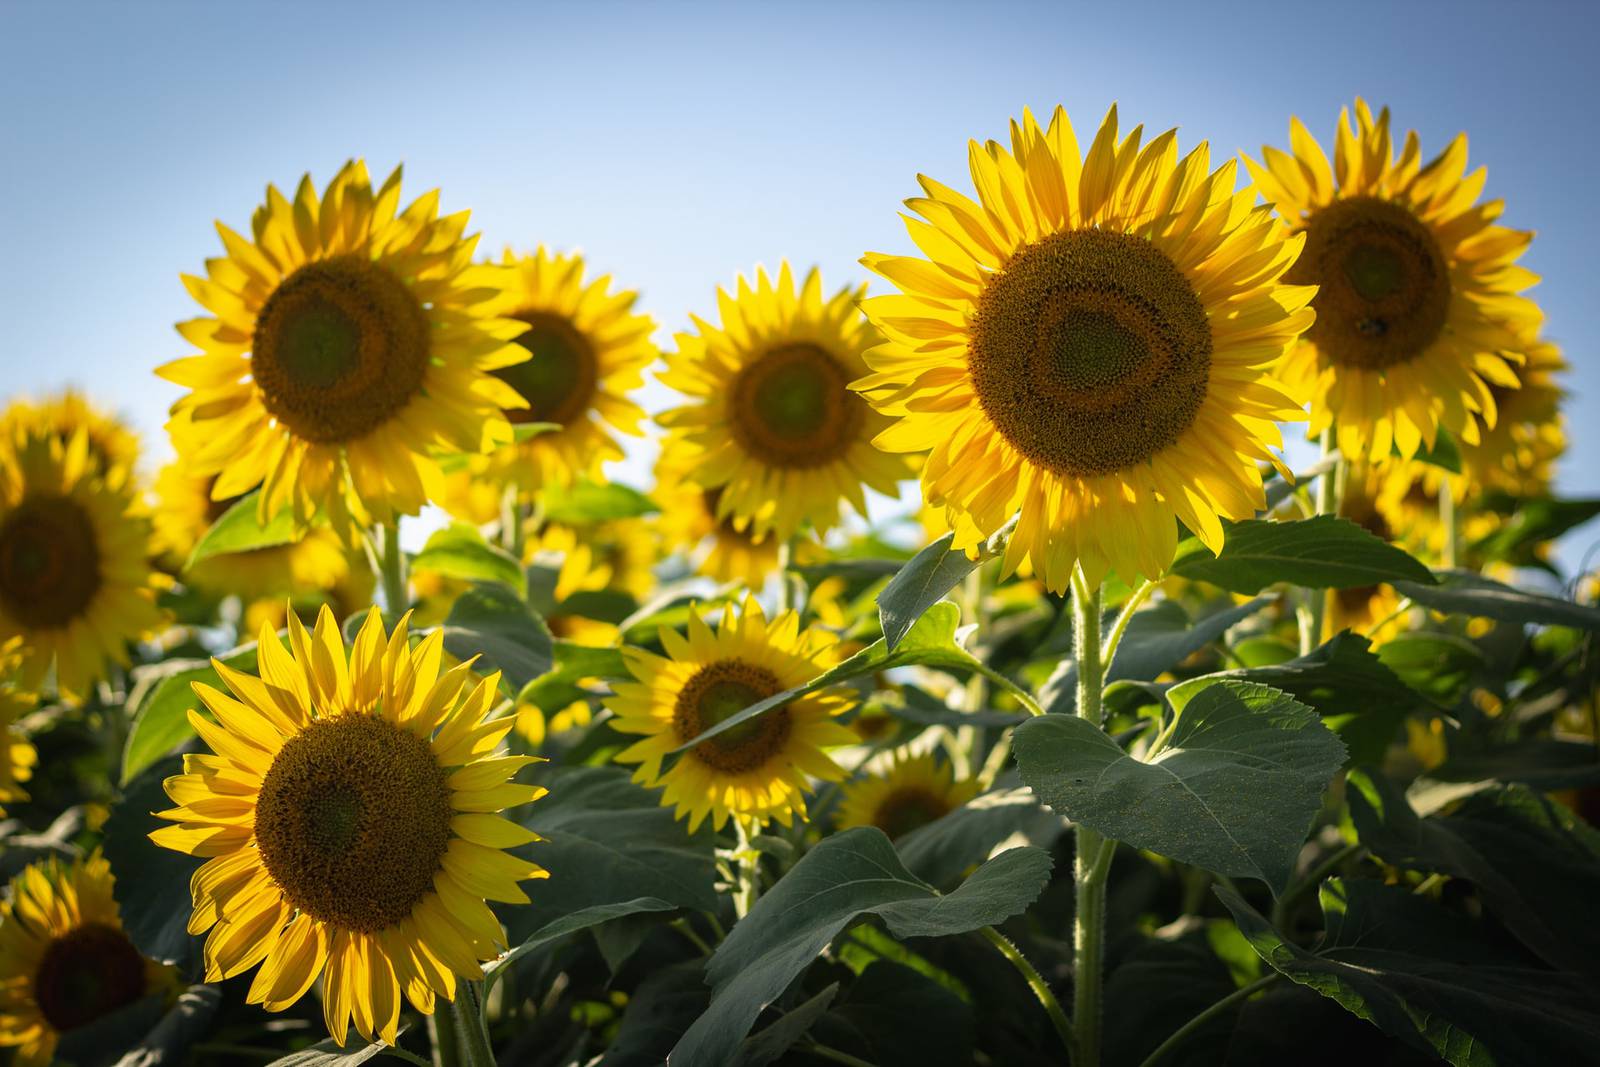 🌻 Sunflower festival being held at western Pennsylvania farm this week